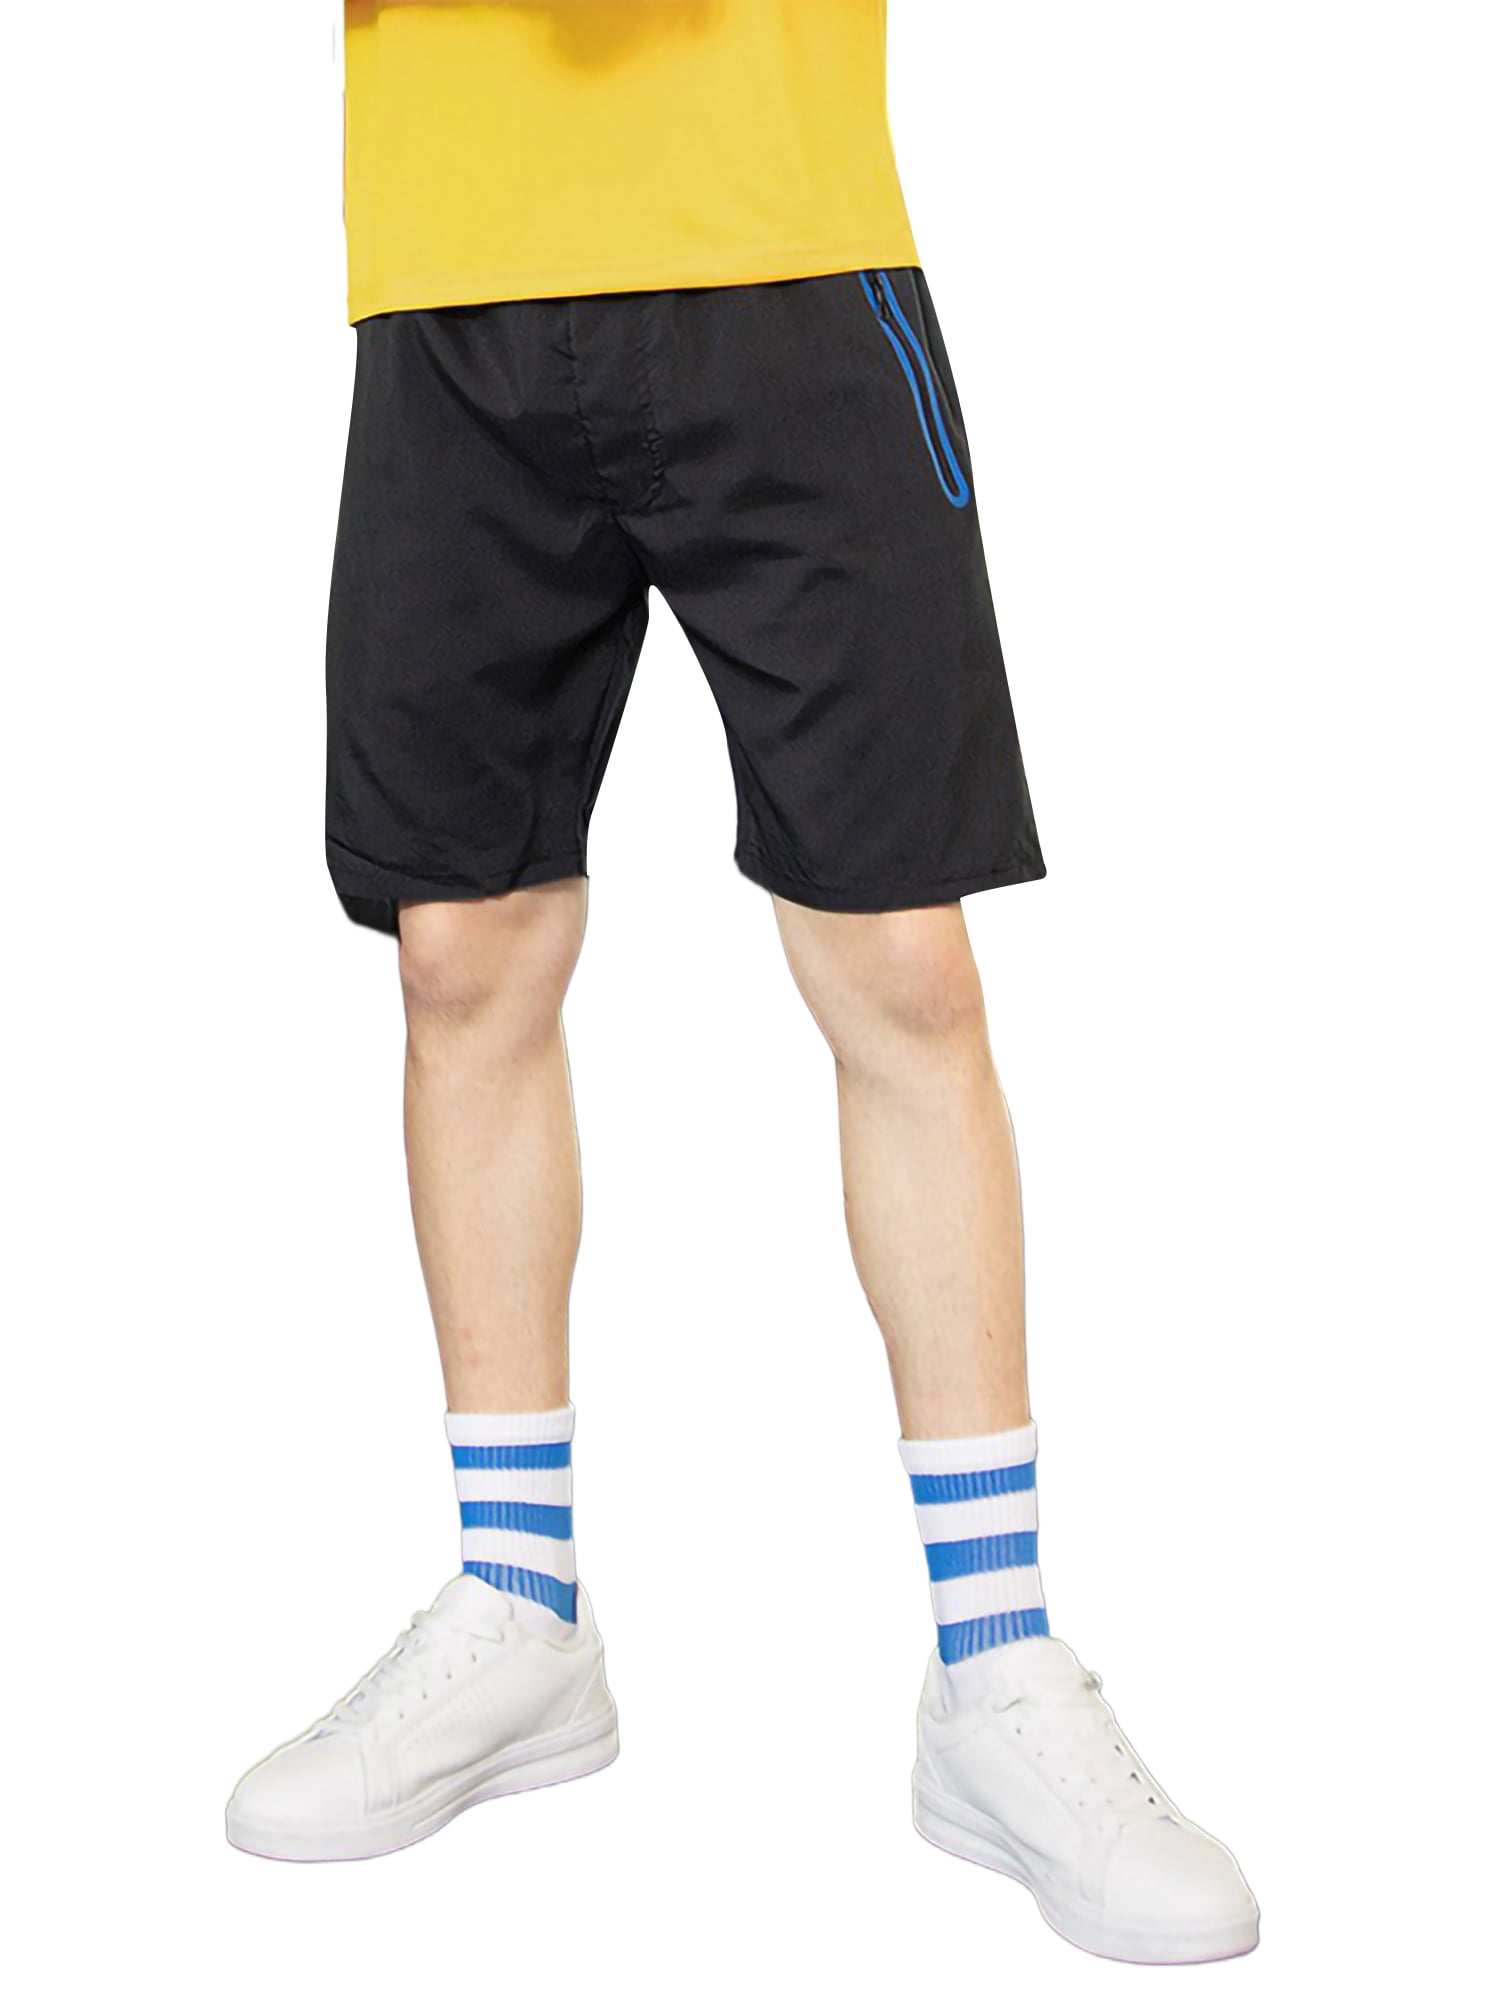 Activewear Mens Shorts with Drawstring and Regular Waist 